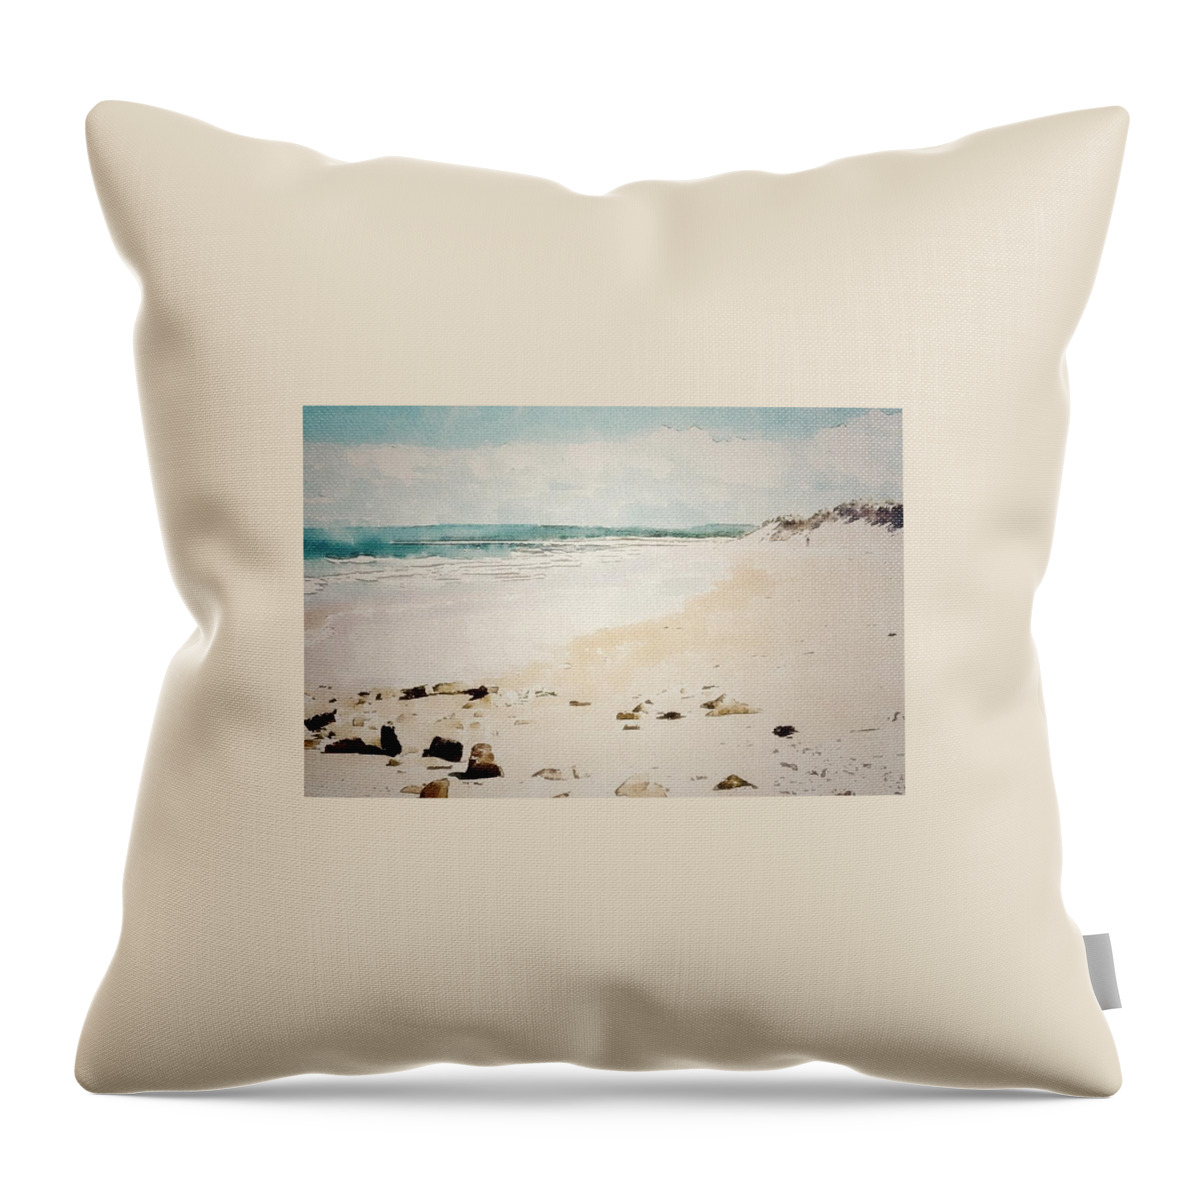 East Beach Throw Pillow featuring the digital art Lossiemouth East Beach #1 by John Mckenzie